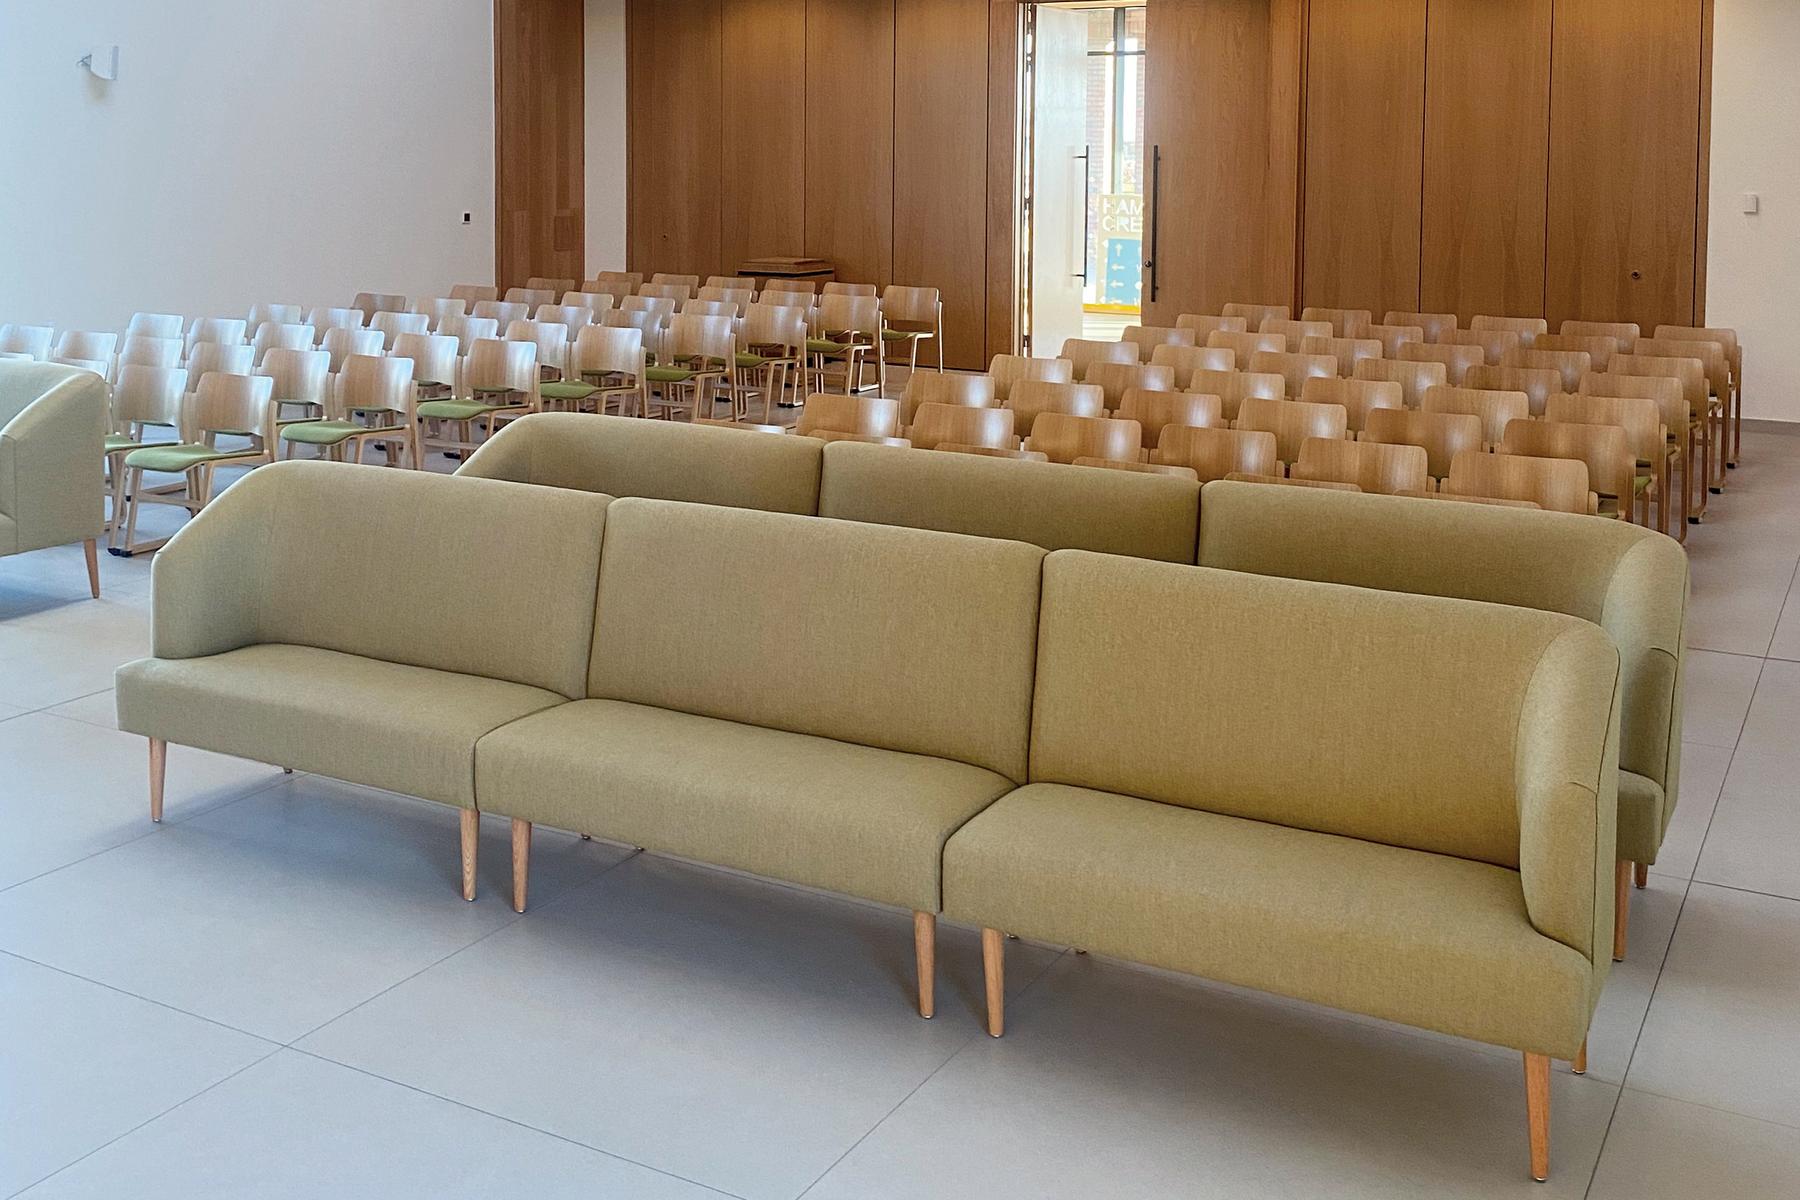 Hambleton chapel seating